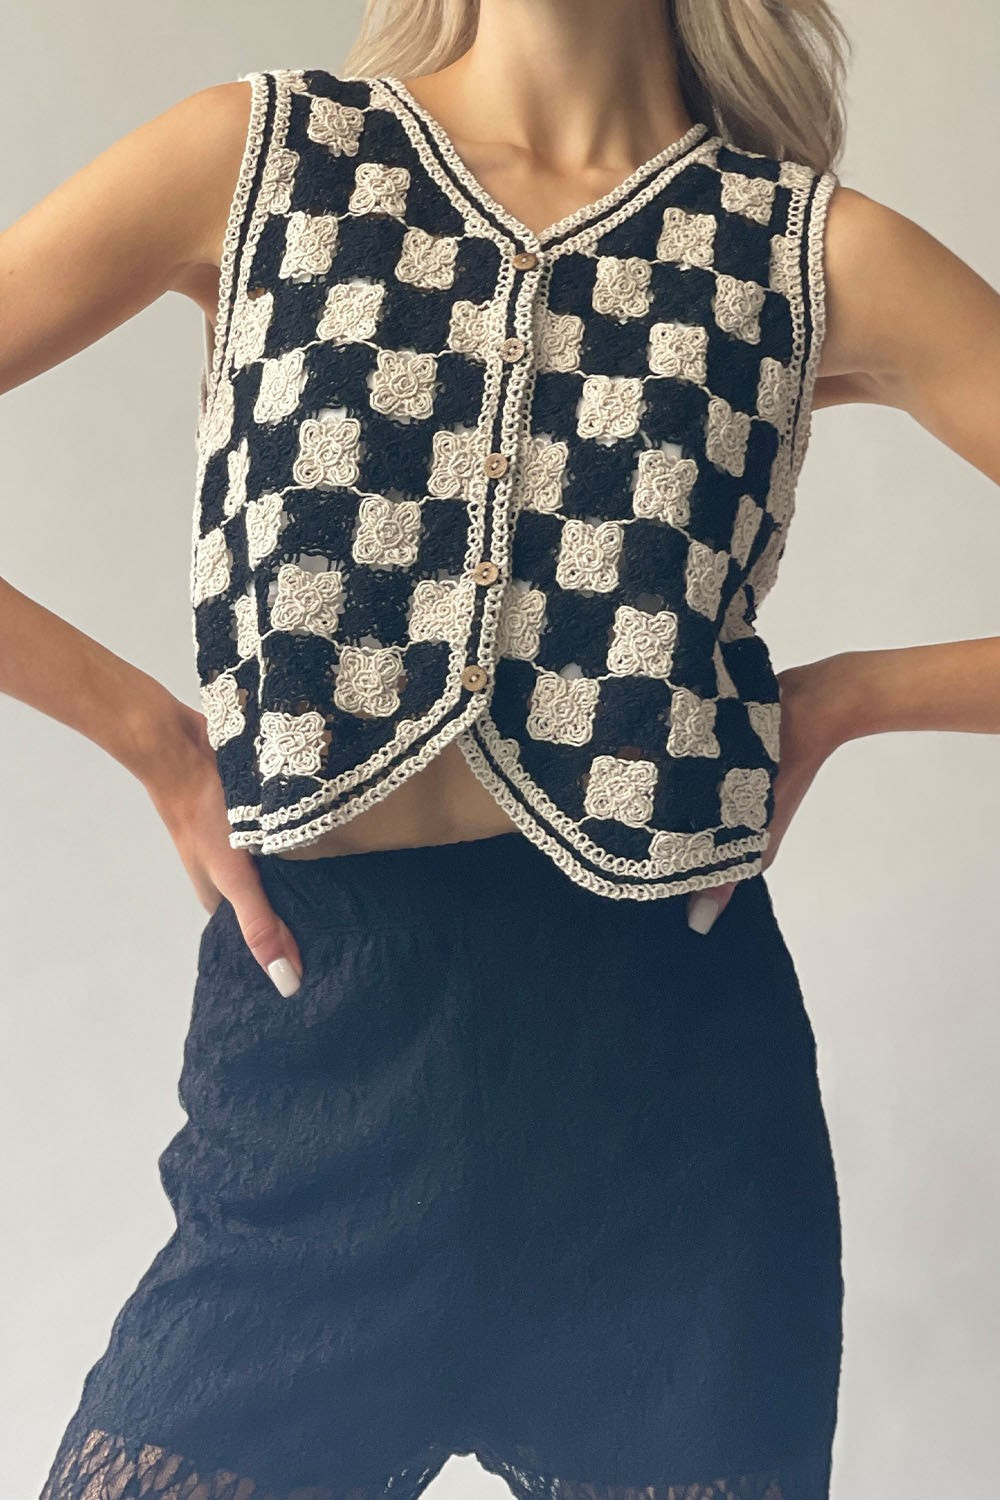 Checkerboard Crochet Vest